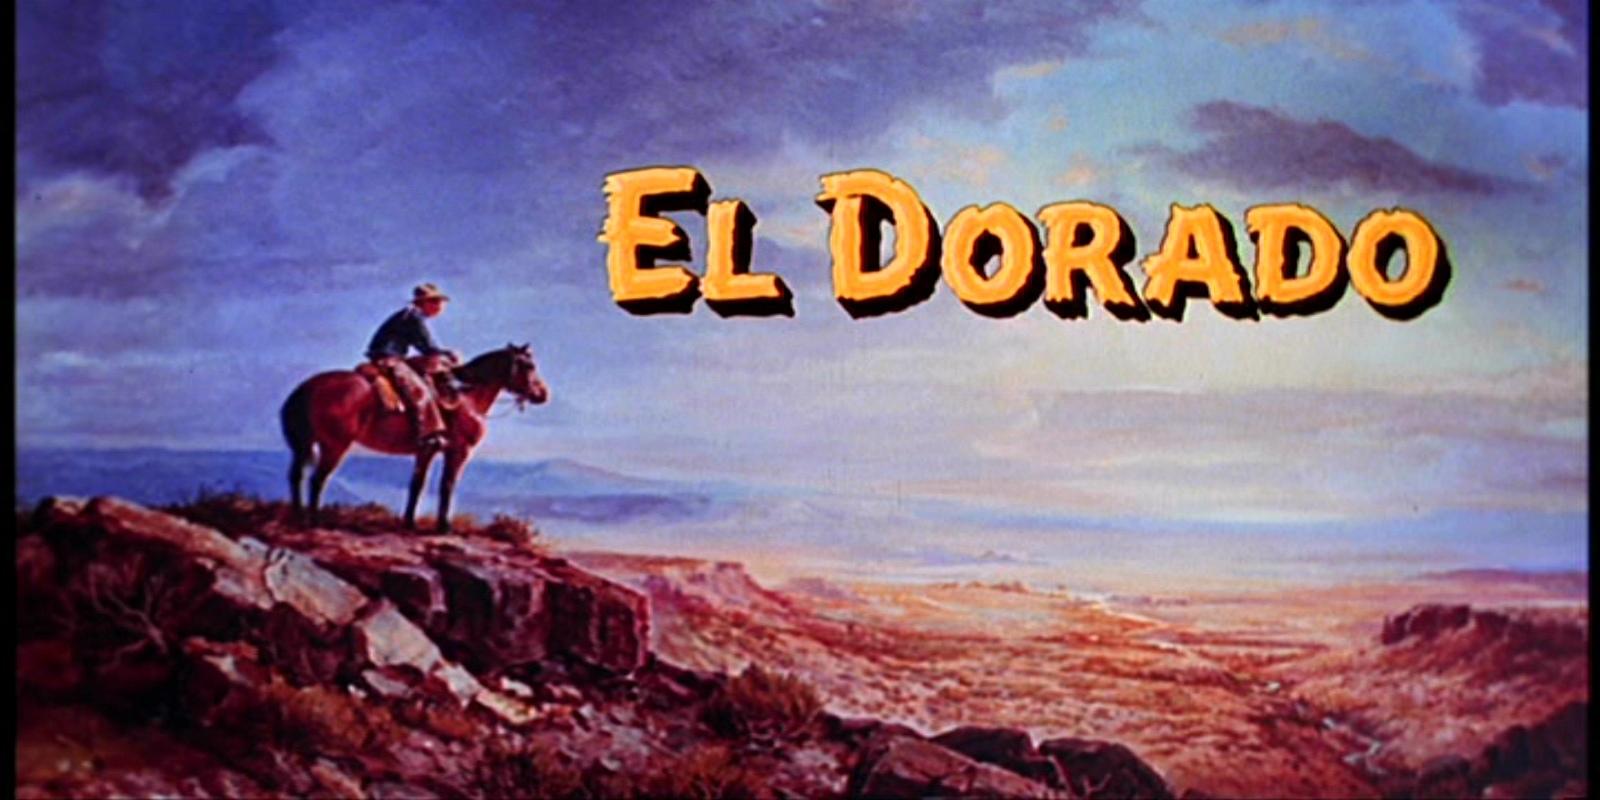 El Dorado at 1600 x 1200 size wallpapers HD quality